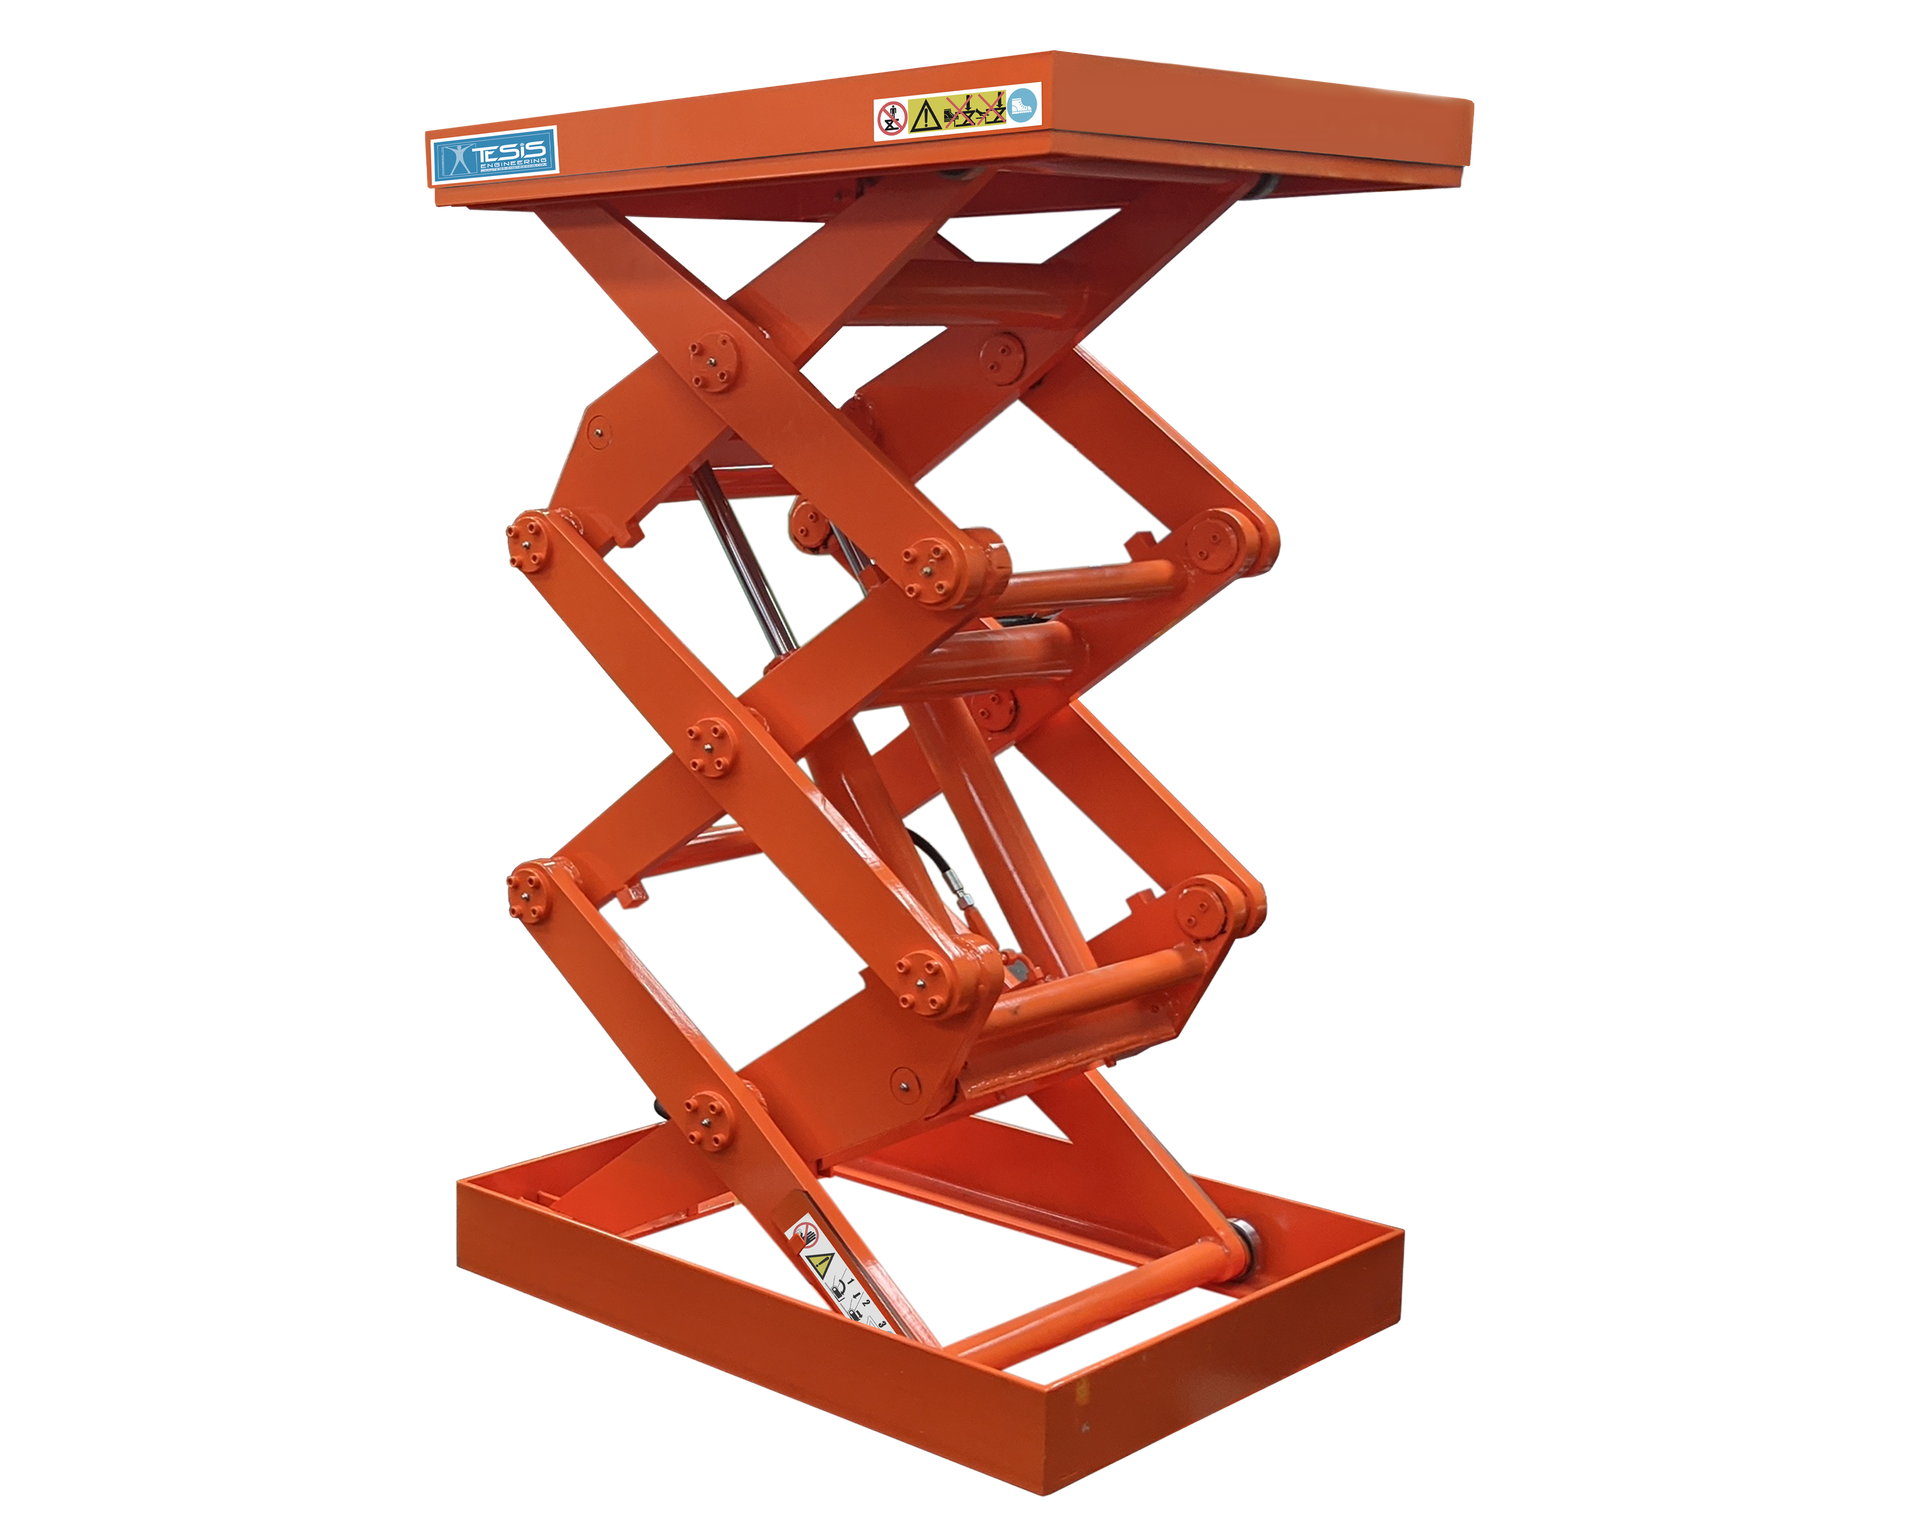 Triple pantograph lift table, triple scissor lift table, multiple height platform lift, high rise lift table, extended travel scissor lift